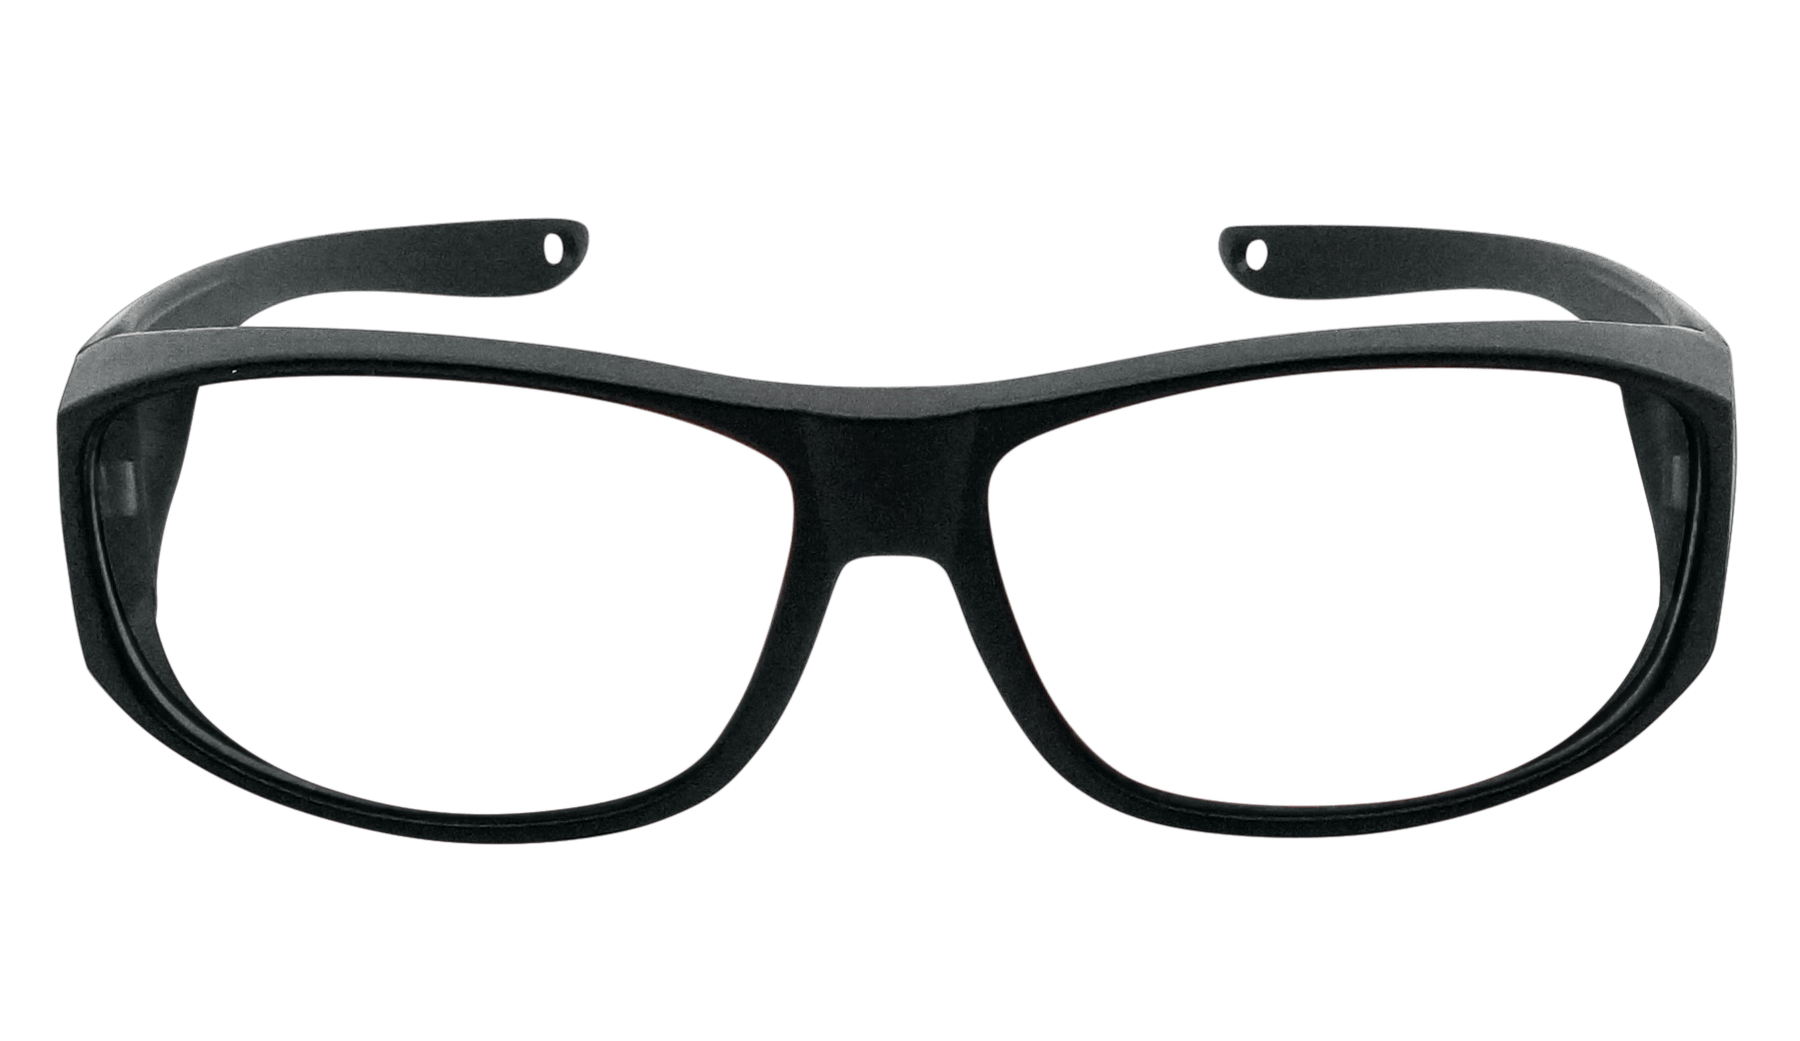 ScreenTime FITOVER Premium Computer Glasses Blue Light Filter Computer Glasses - Clear Lens BlockBlueLight 